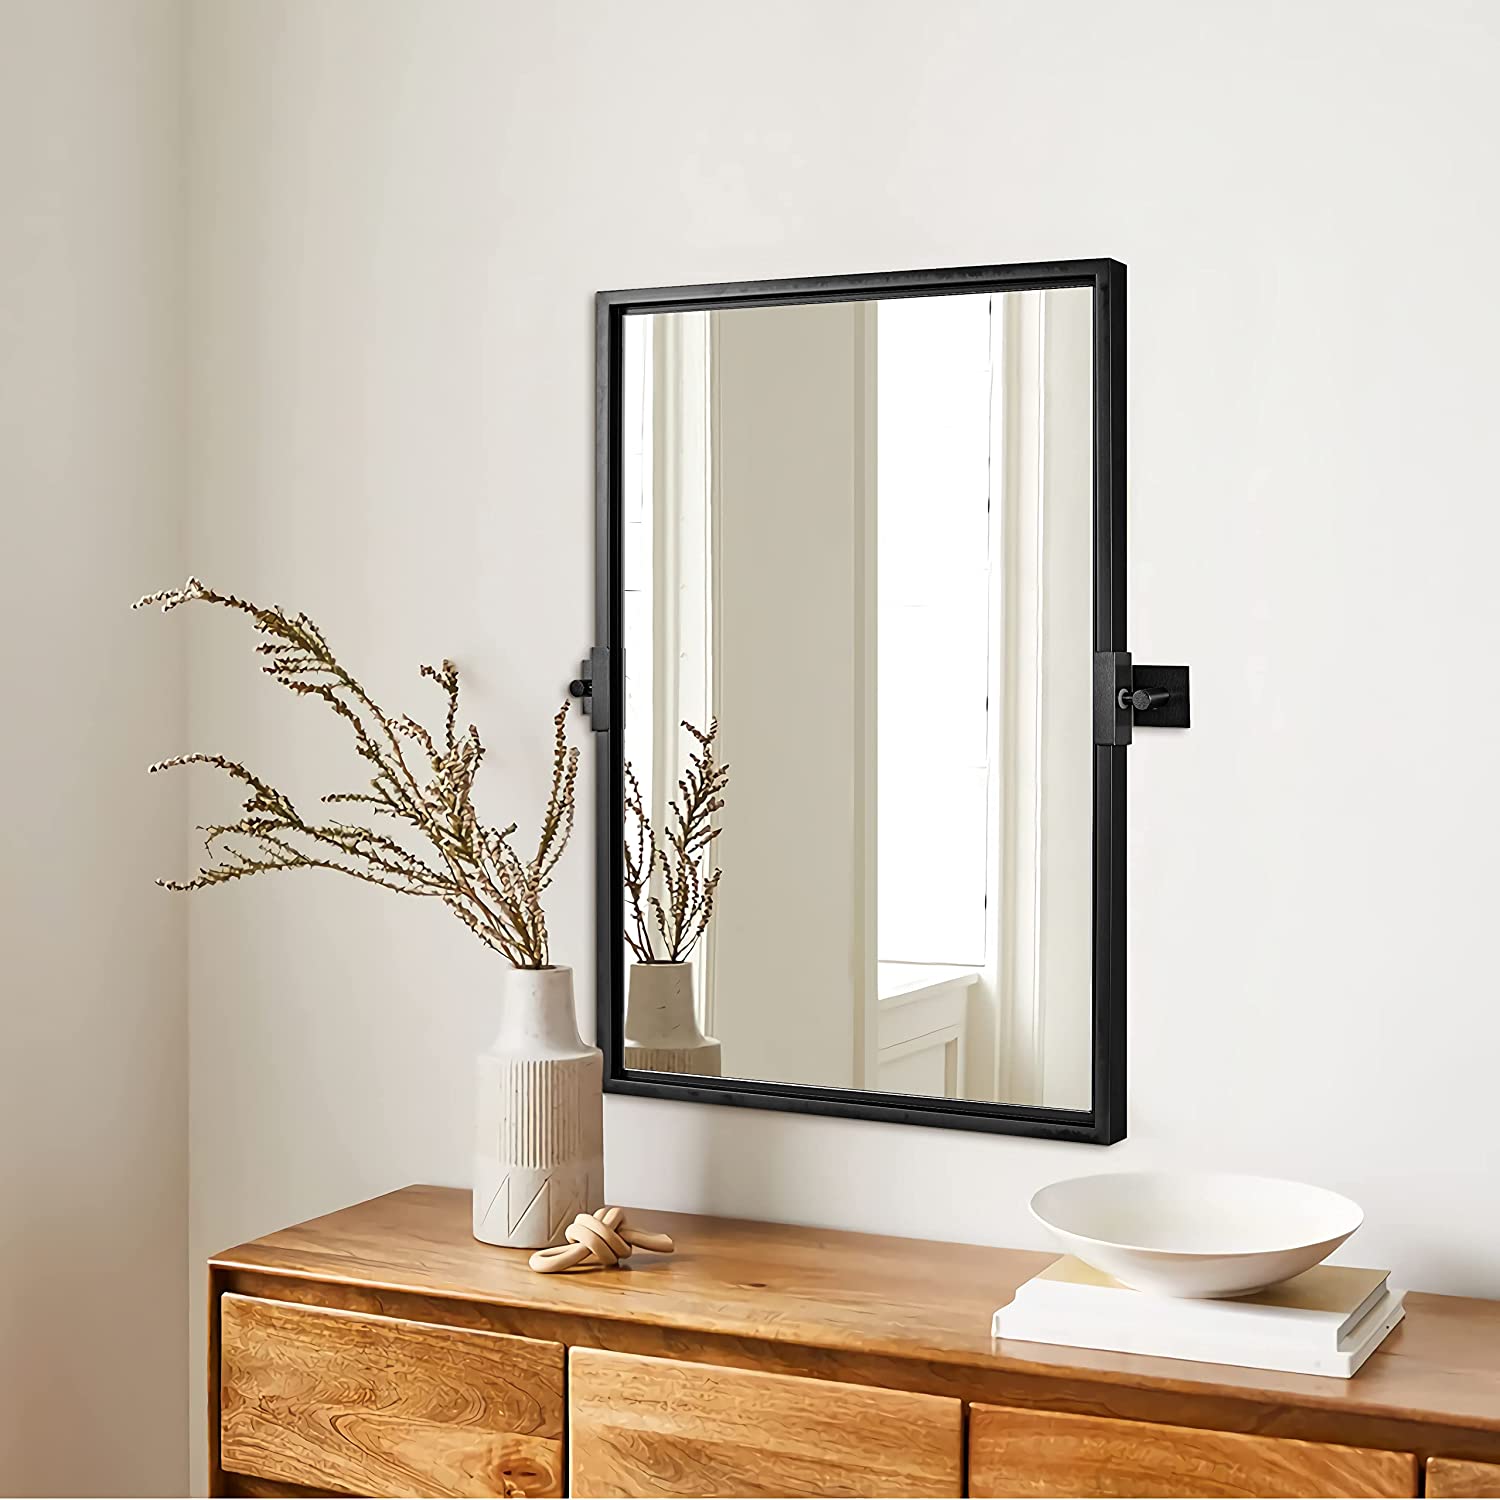 MOON MIRROR Black Pivot Swivel Titling Mirrors Farmhouse Bathroom Vanity Mirror Rectangle Wall Mirror| Wooden Mirror